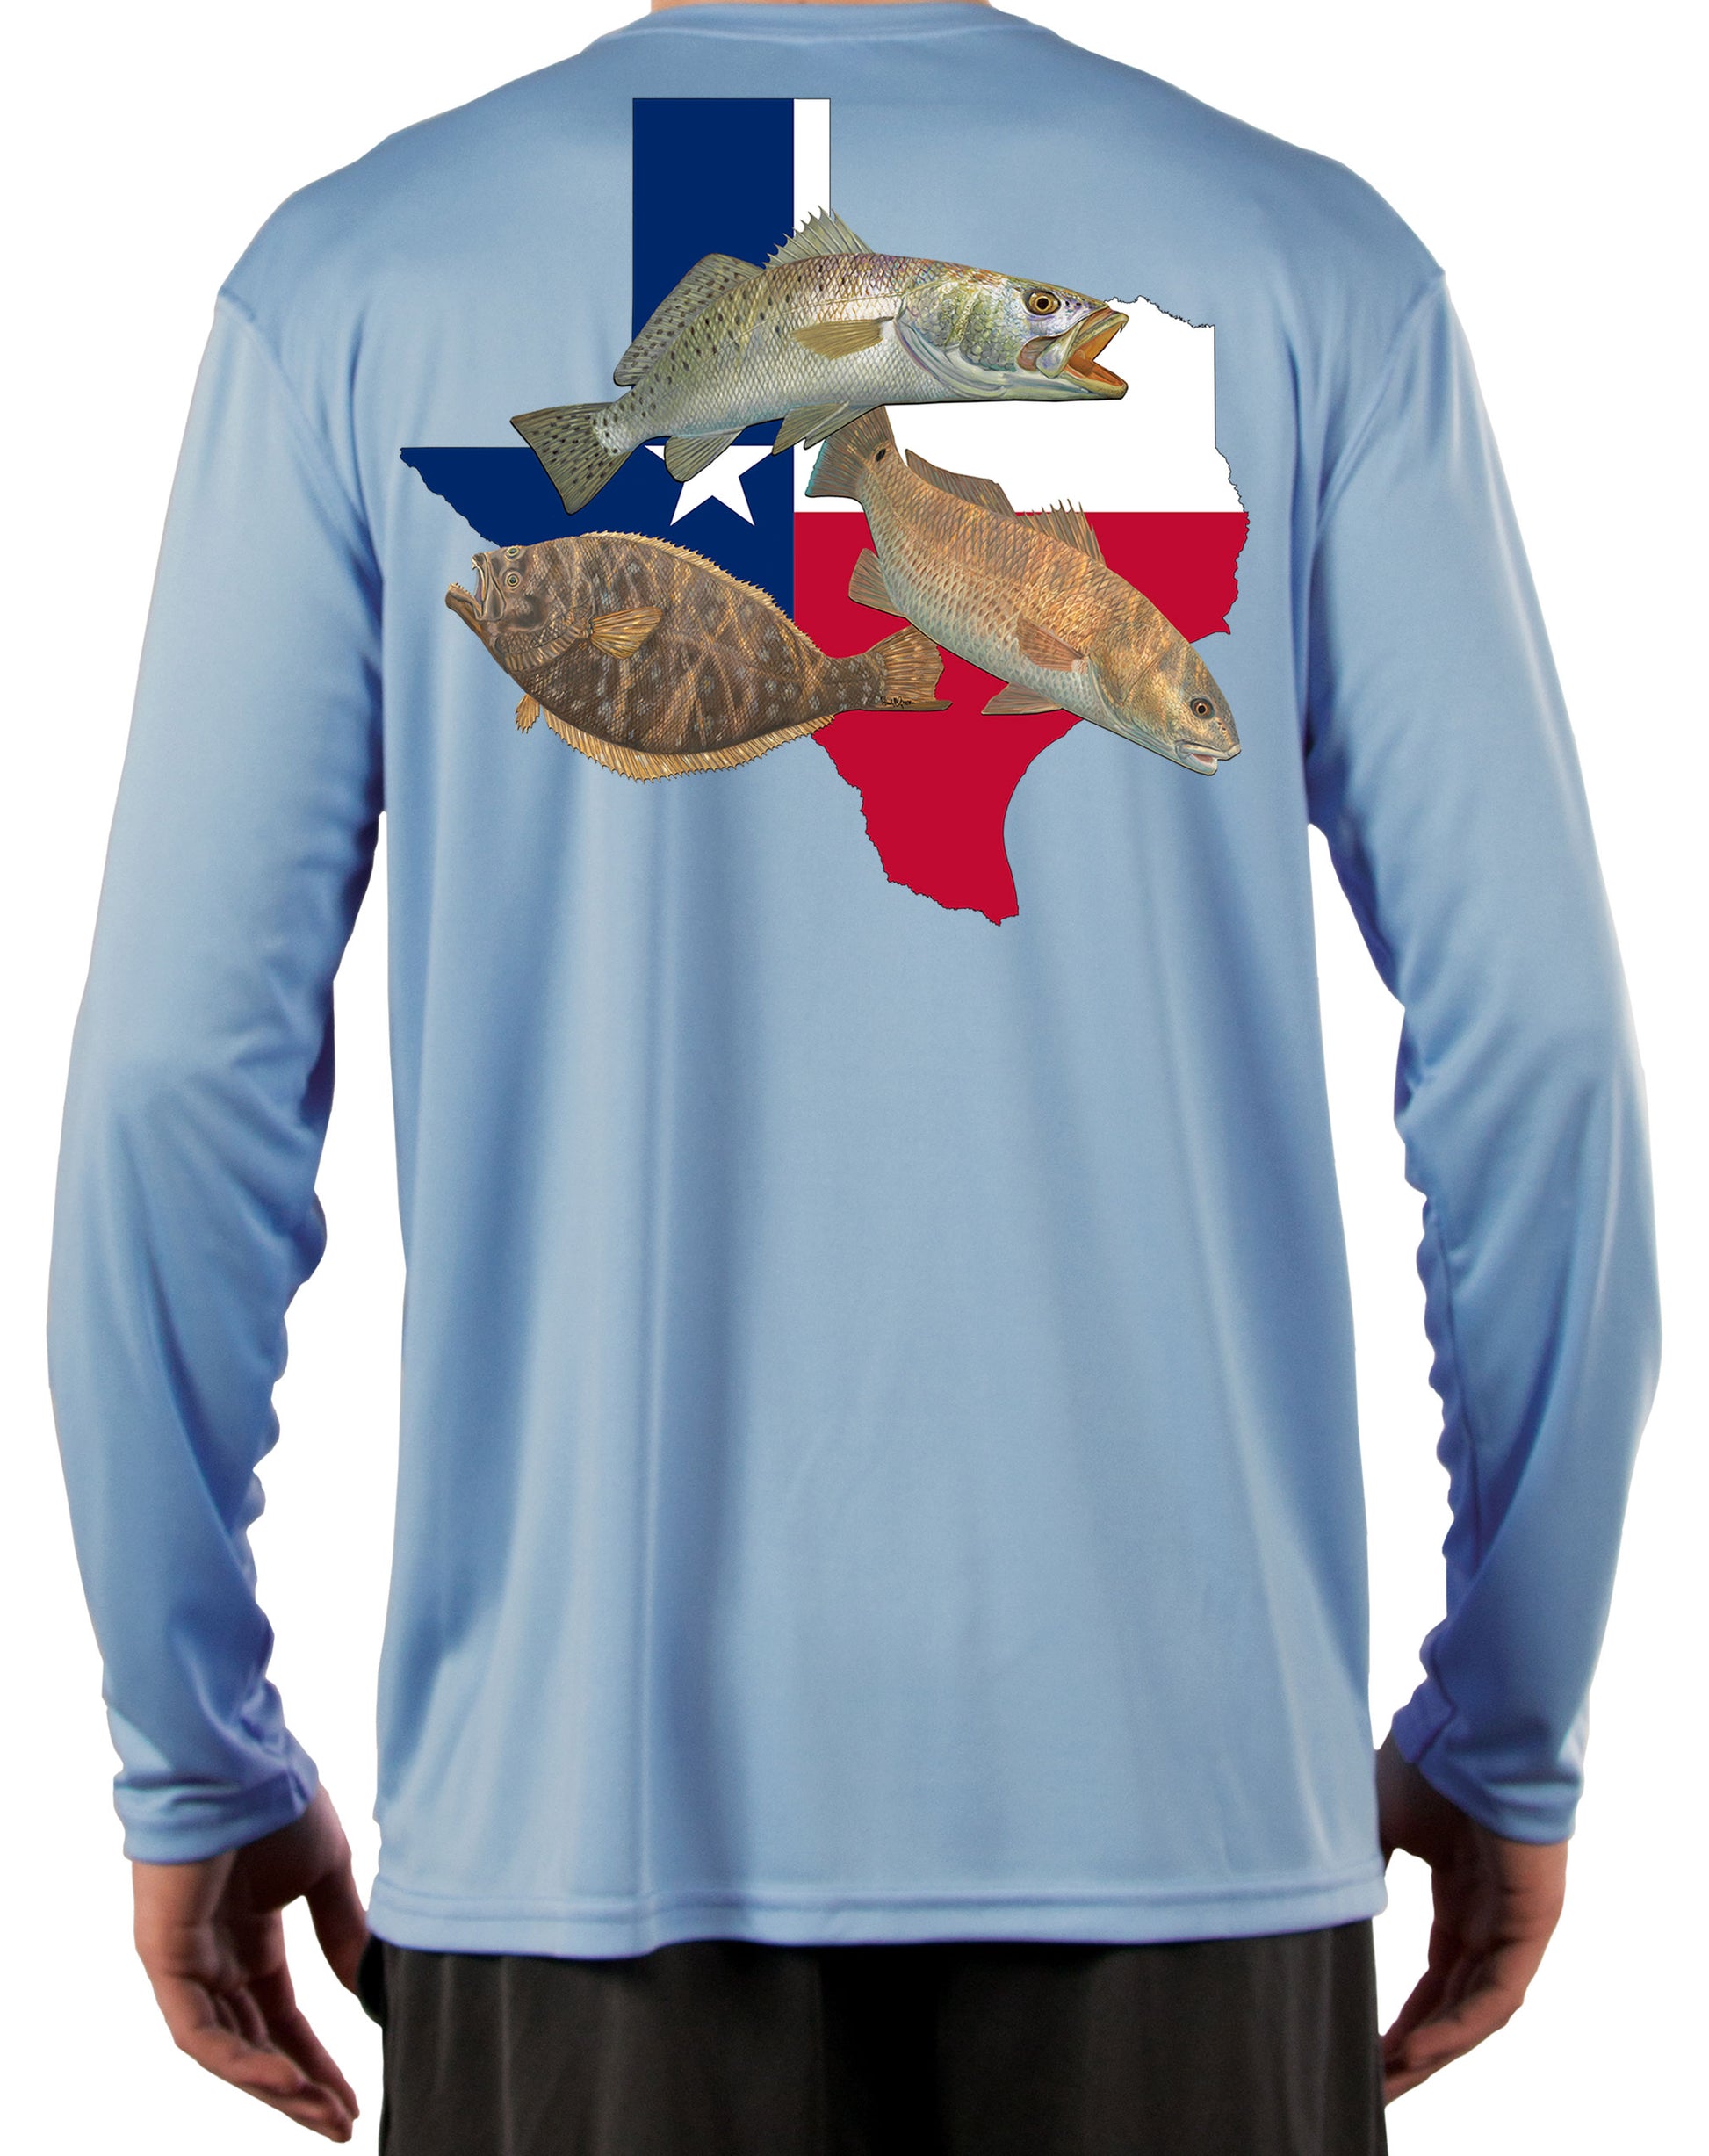 Fishing Shirt Texas Slam Texas State Flag with Optional Flag Sleeve